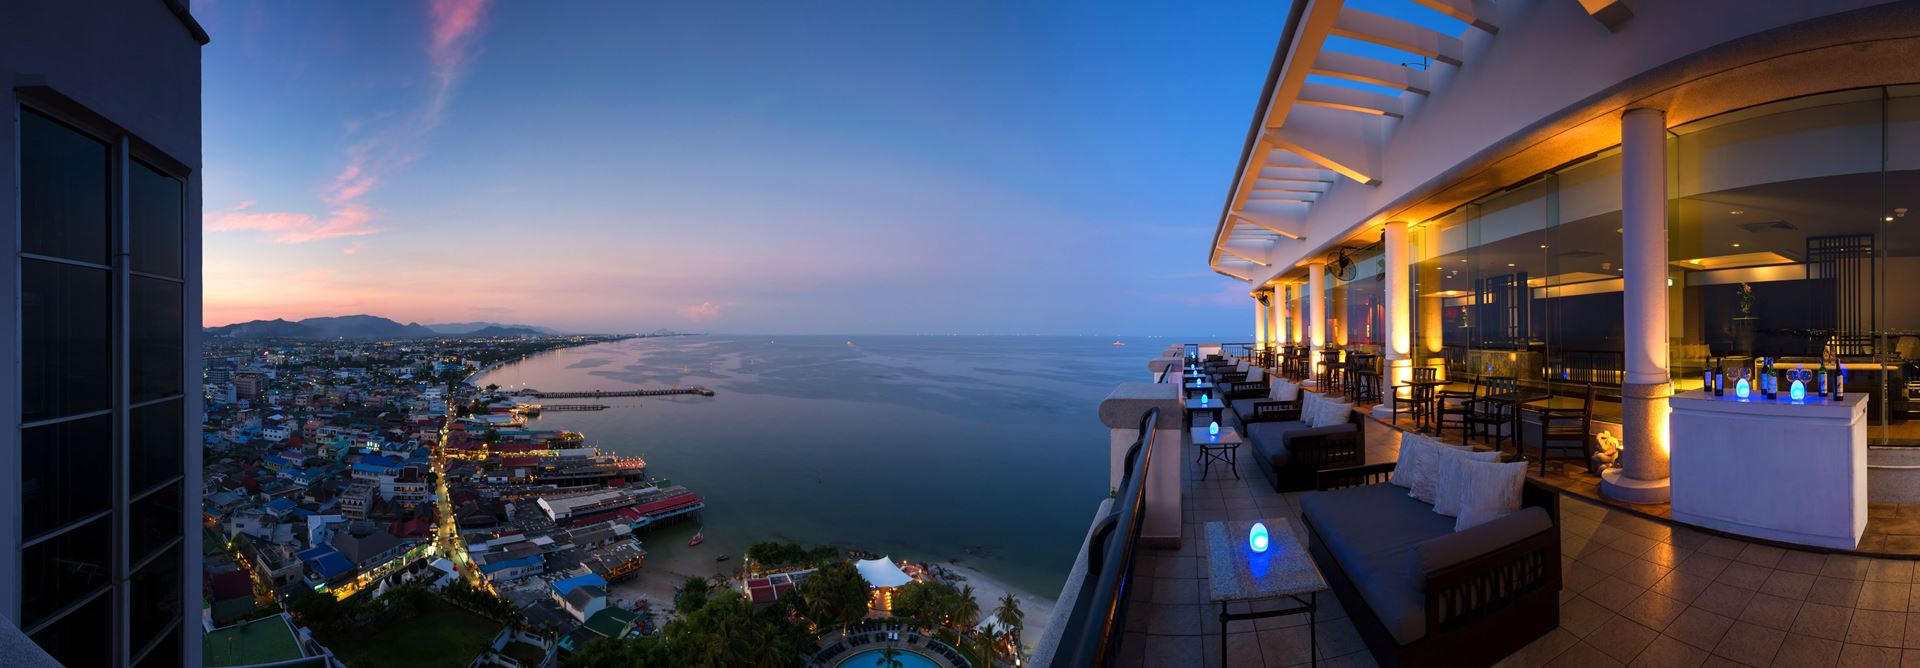 Hilton Resort & Spa Hua Hin | Golf i Thailand